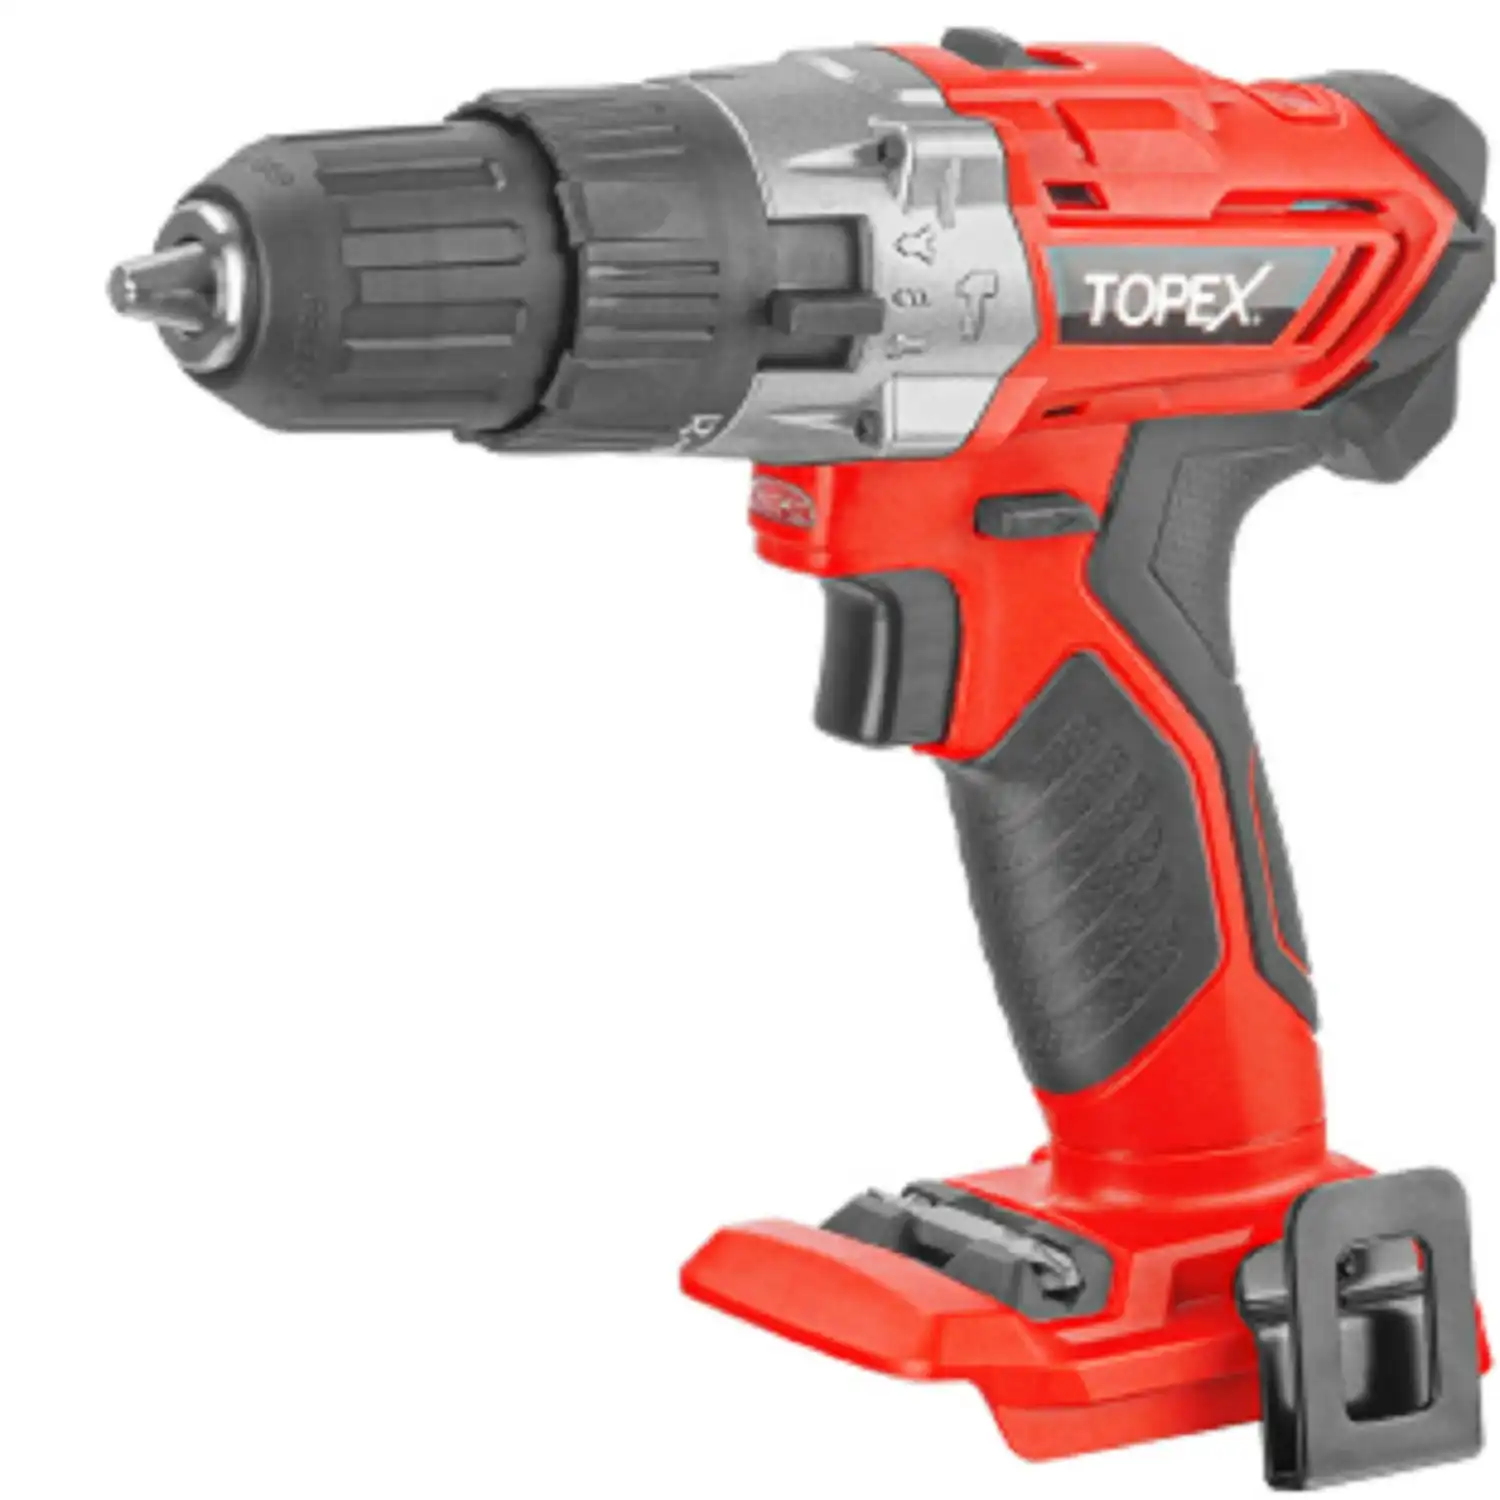 Topex Cordless Drill Driver Impact Hammer drill (Skin)